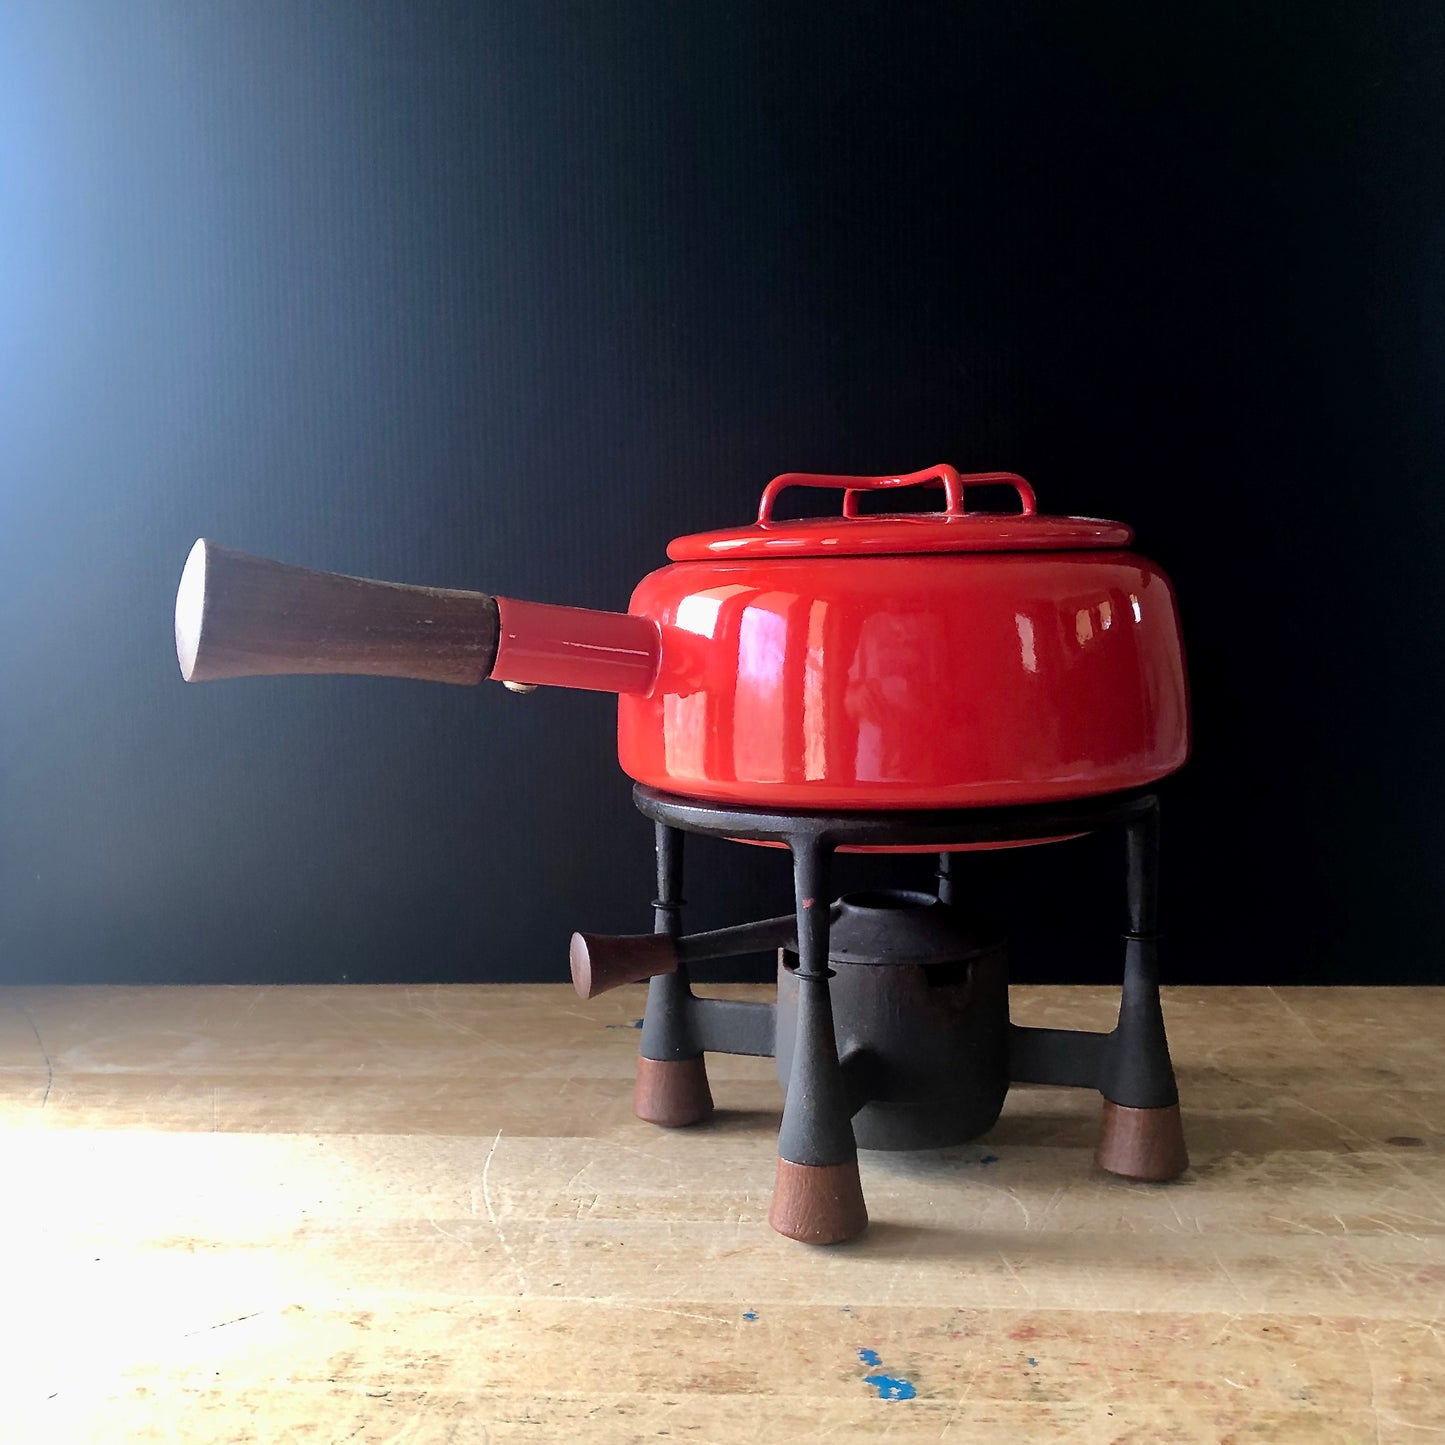 1960s Dansk Red Enamel Small Baking Pan Made in France